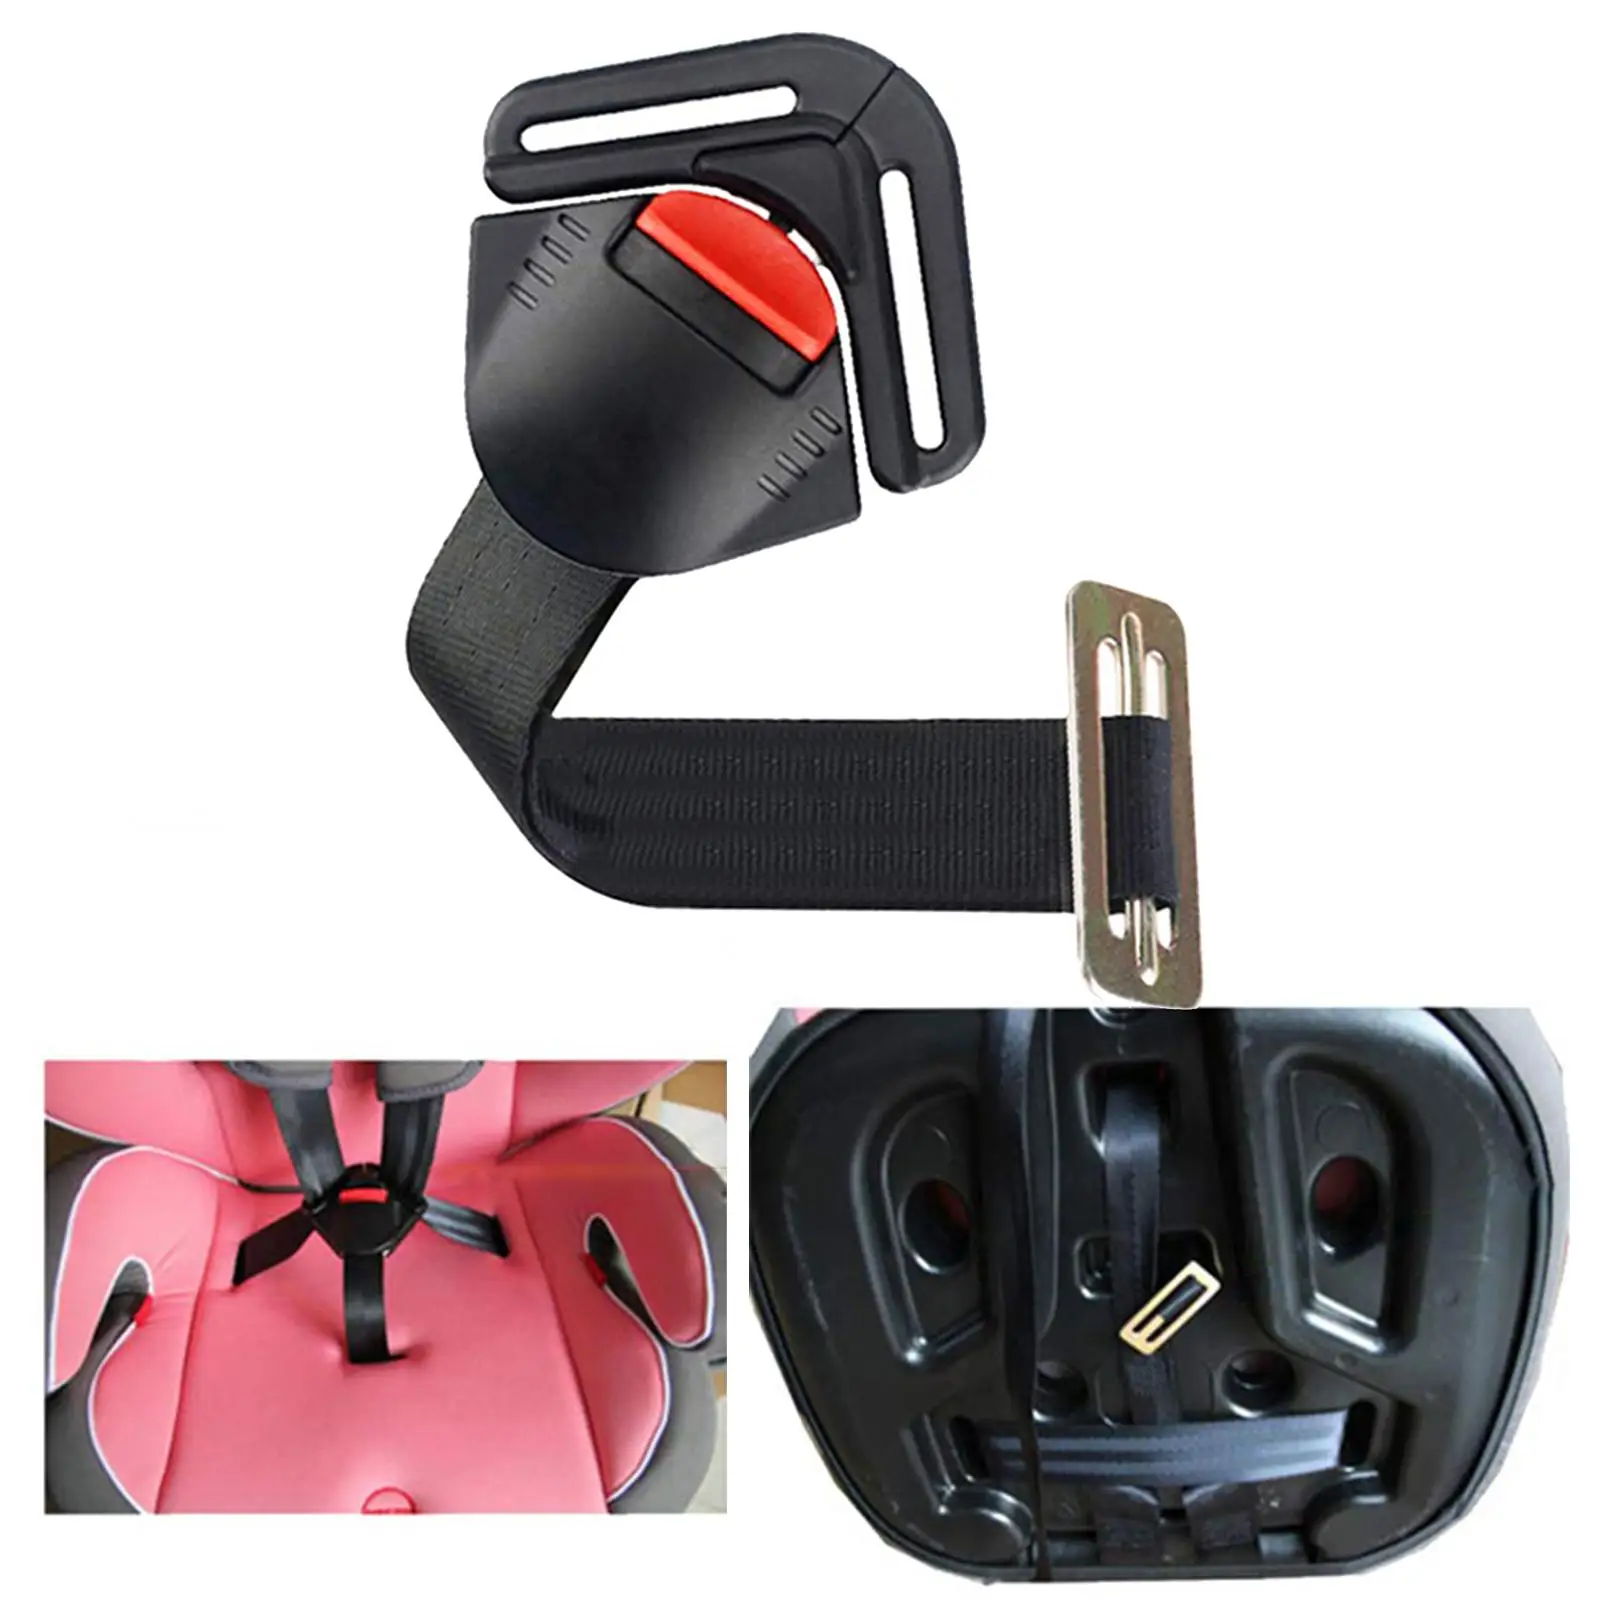 Car Child Seat Safety Belt Buckle 5 Point Safety Harness Locking Buckle Clip for Stroller Pram Buggy Kid Pushchair